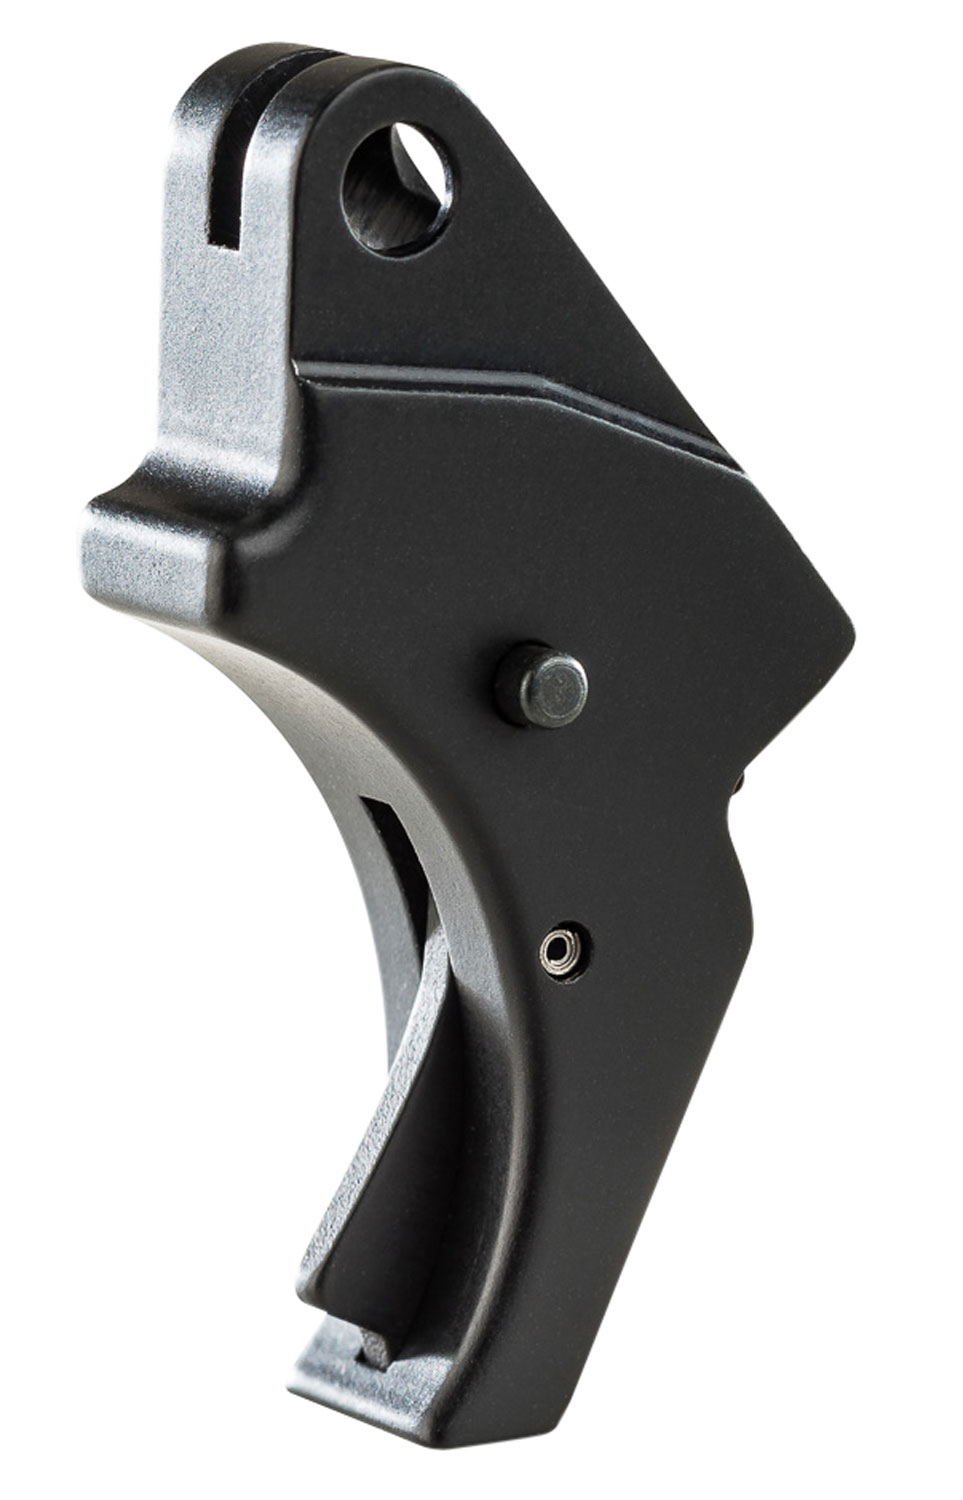 Apex Tactical 100067 Aluminum Forward Set Sear & Trigger Kit Drop-in 4-5 lbs for S&W M&P